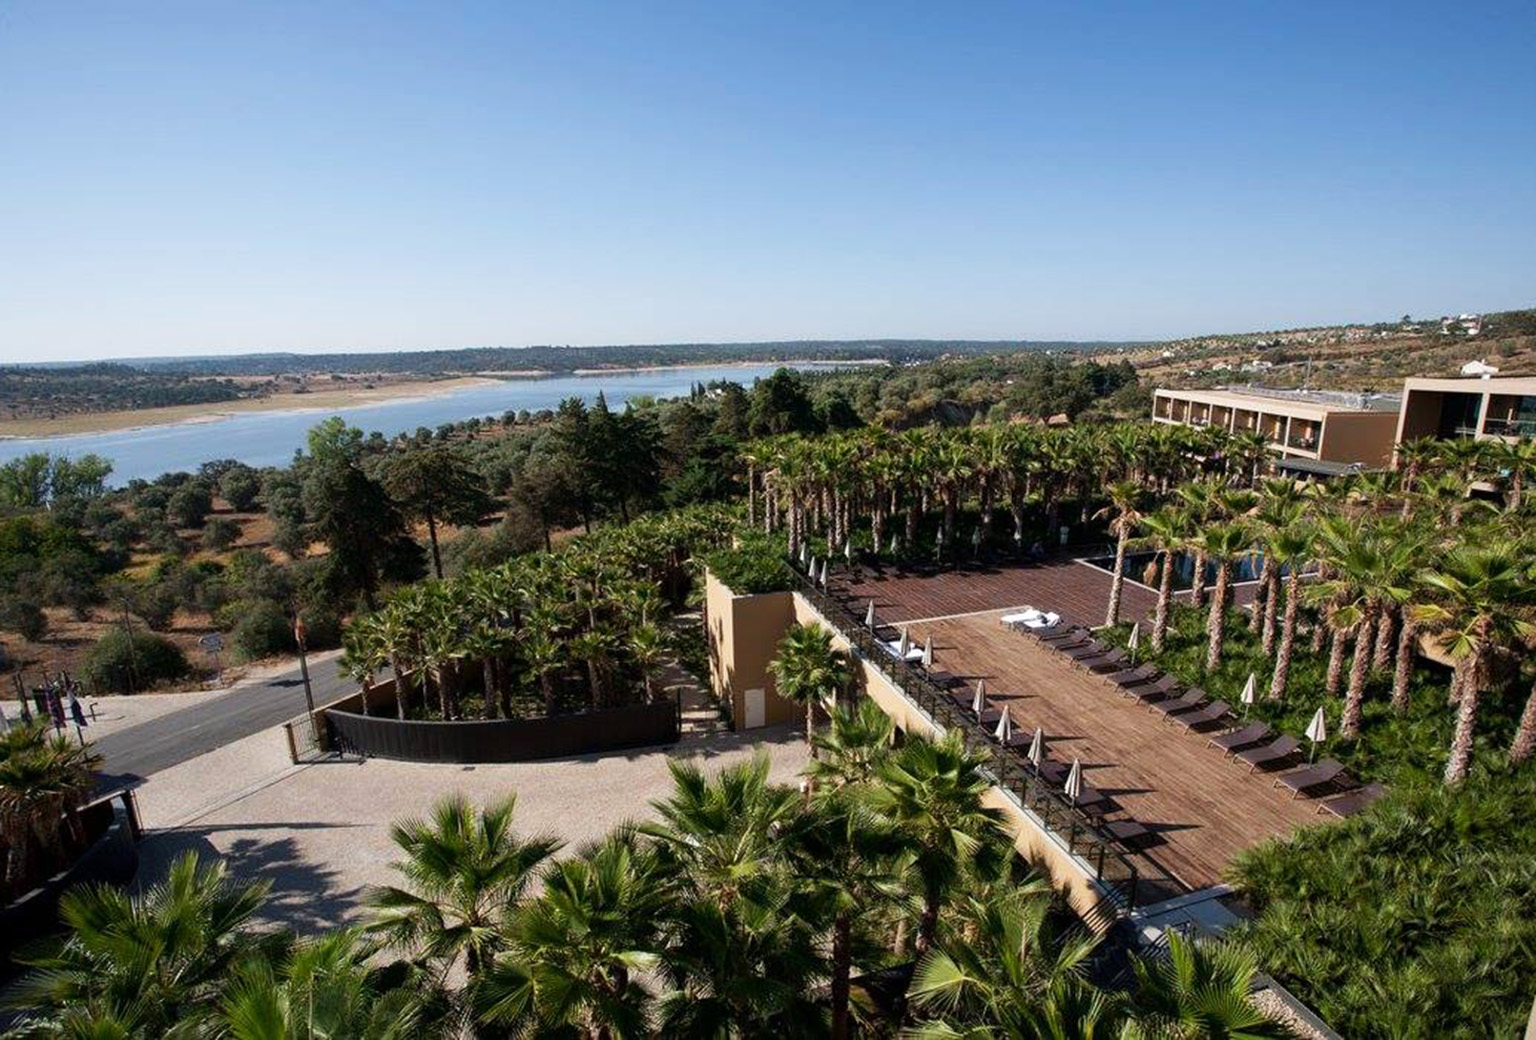 Colliers vende Hotel Lago Montargil & Villas a grupo português